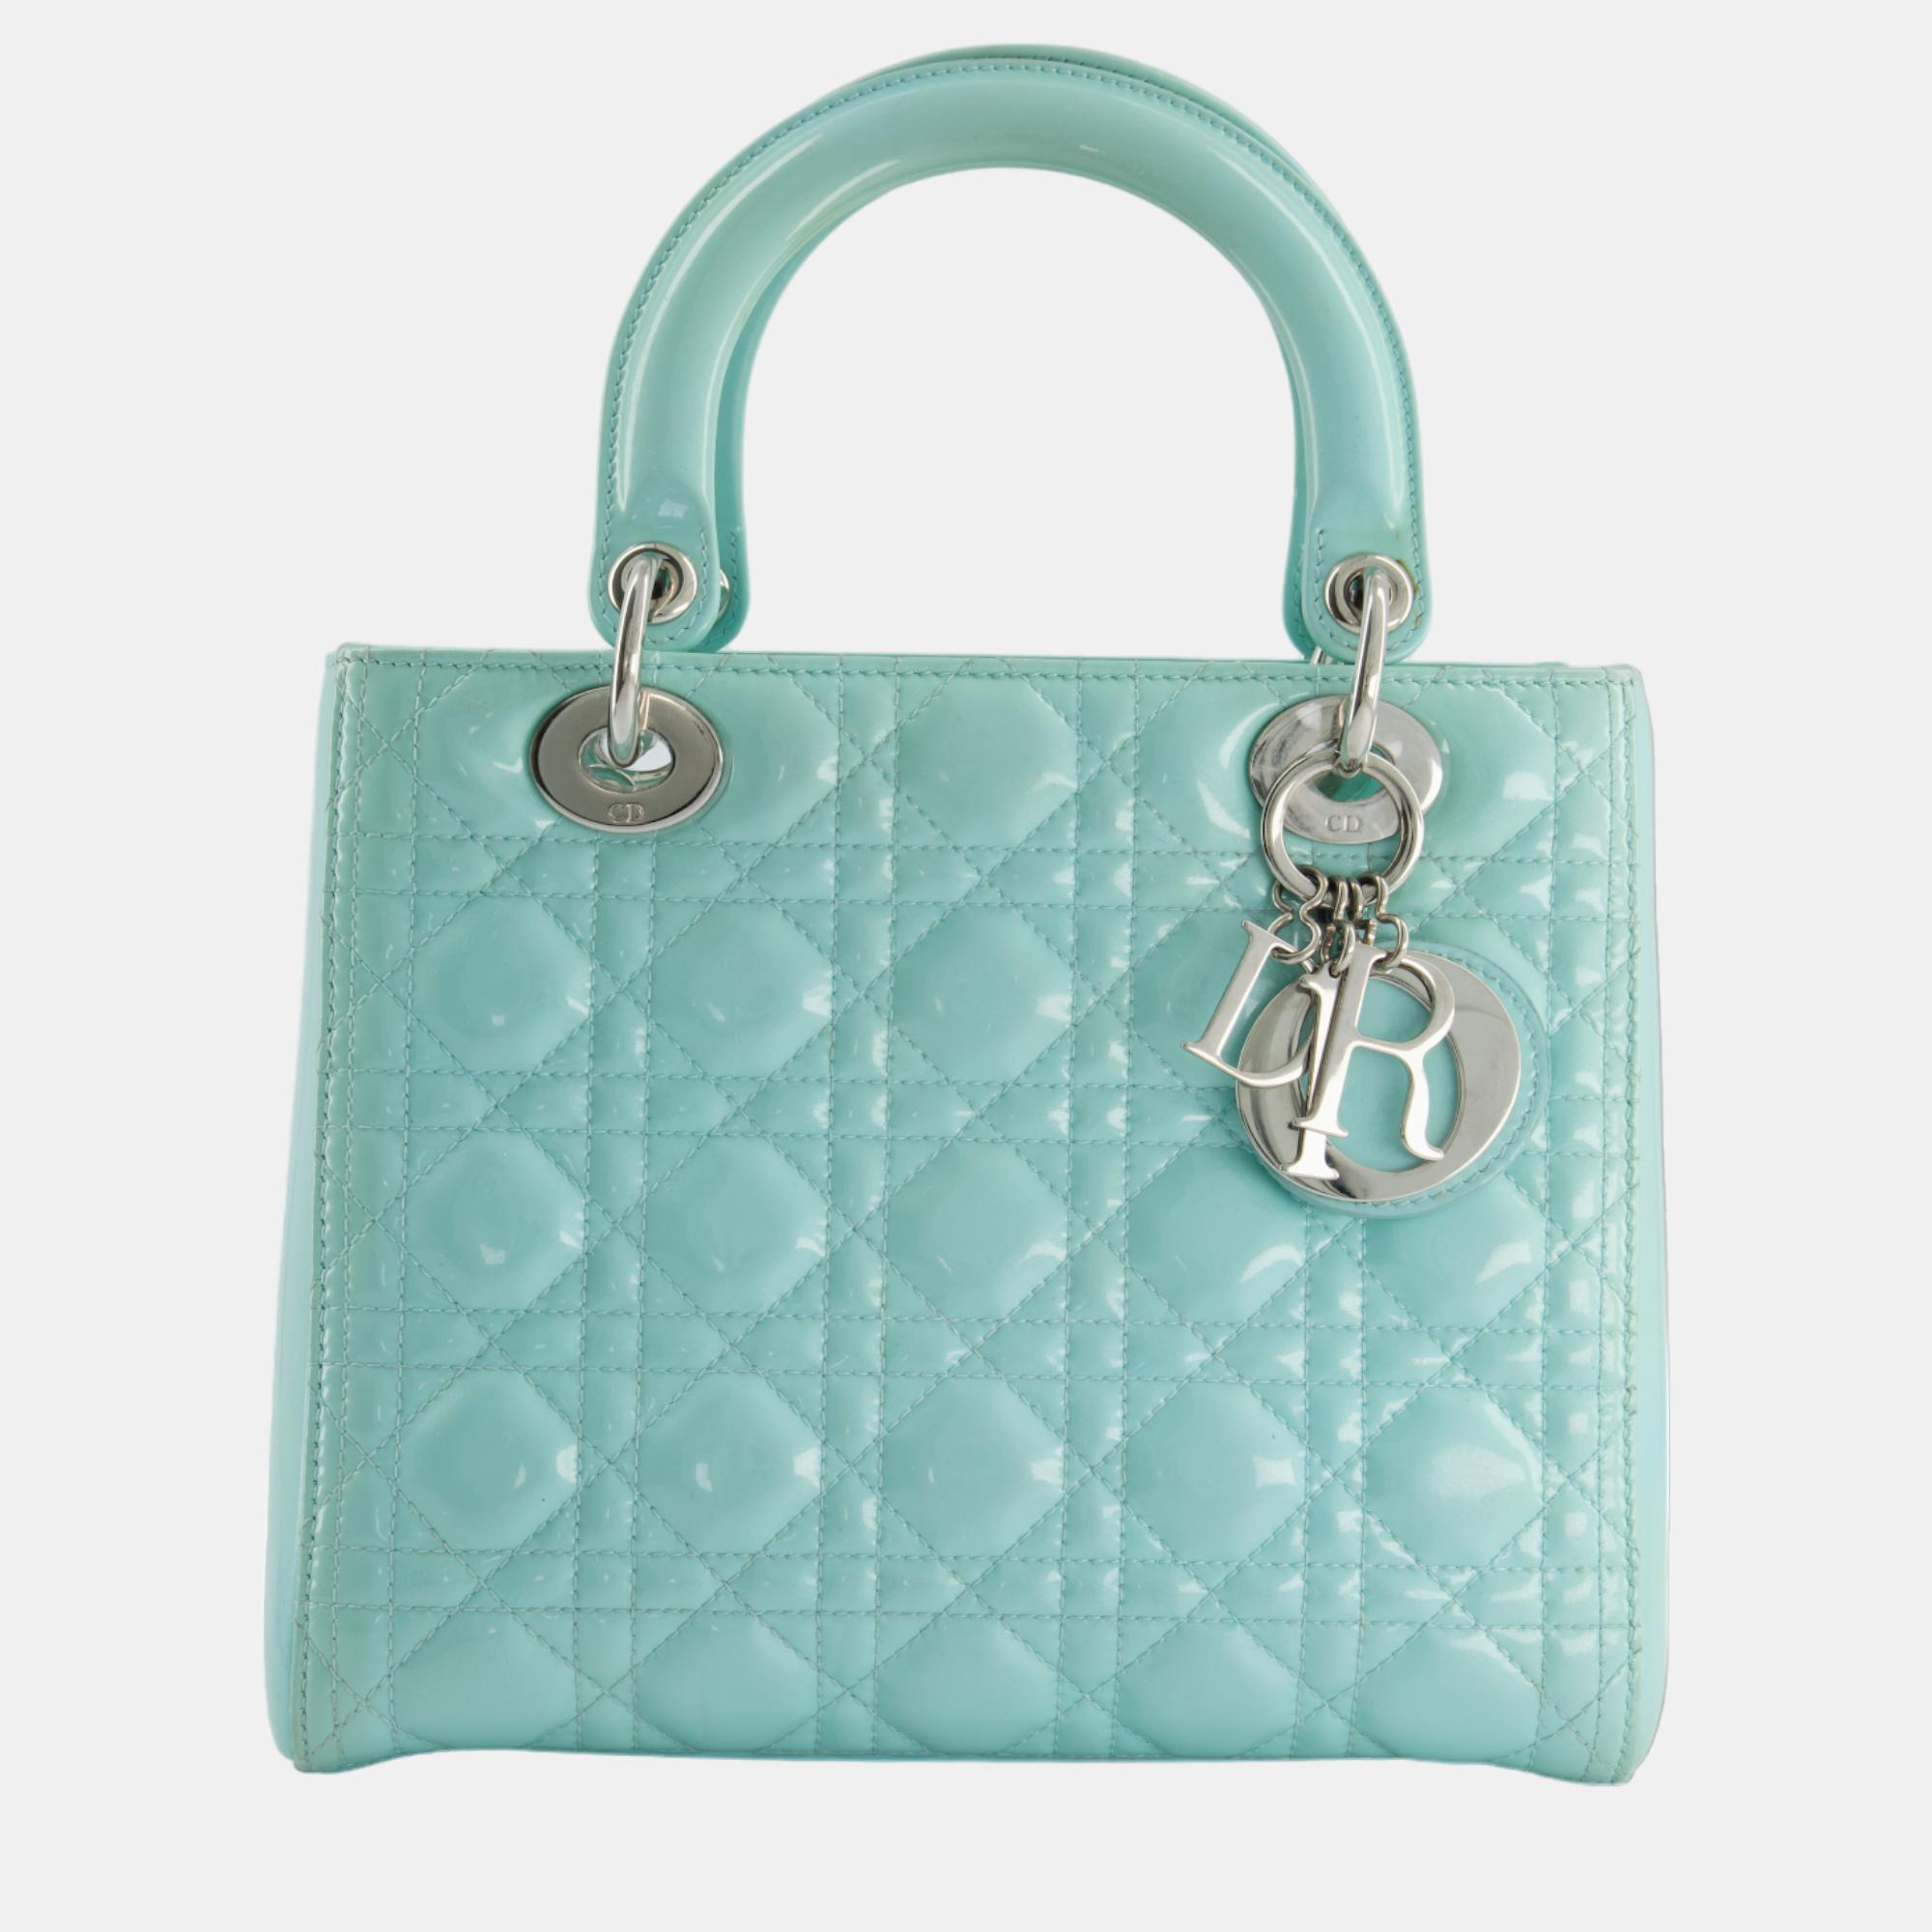 Christian Dior Tiffany Blue Medium Lady Dior Bag Patent with Silver Hardware